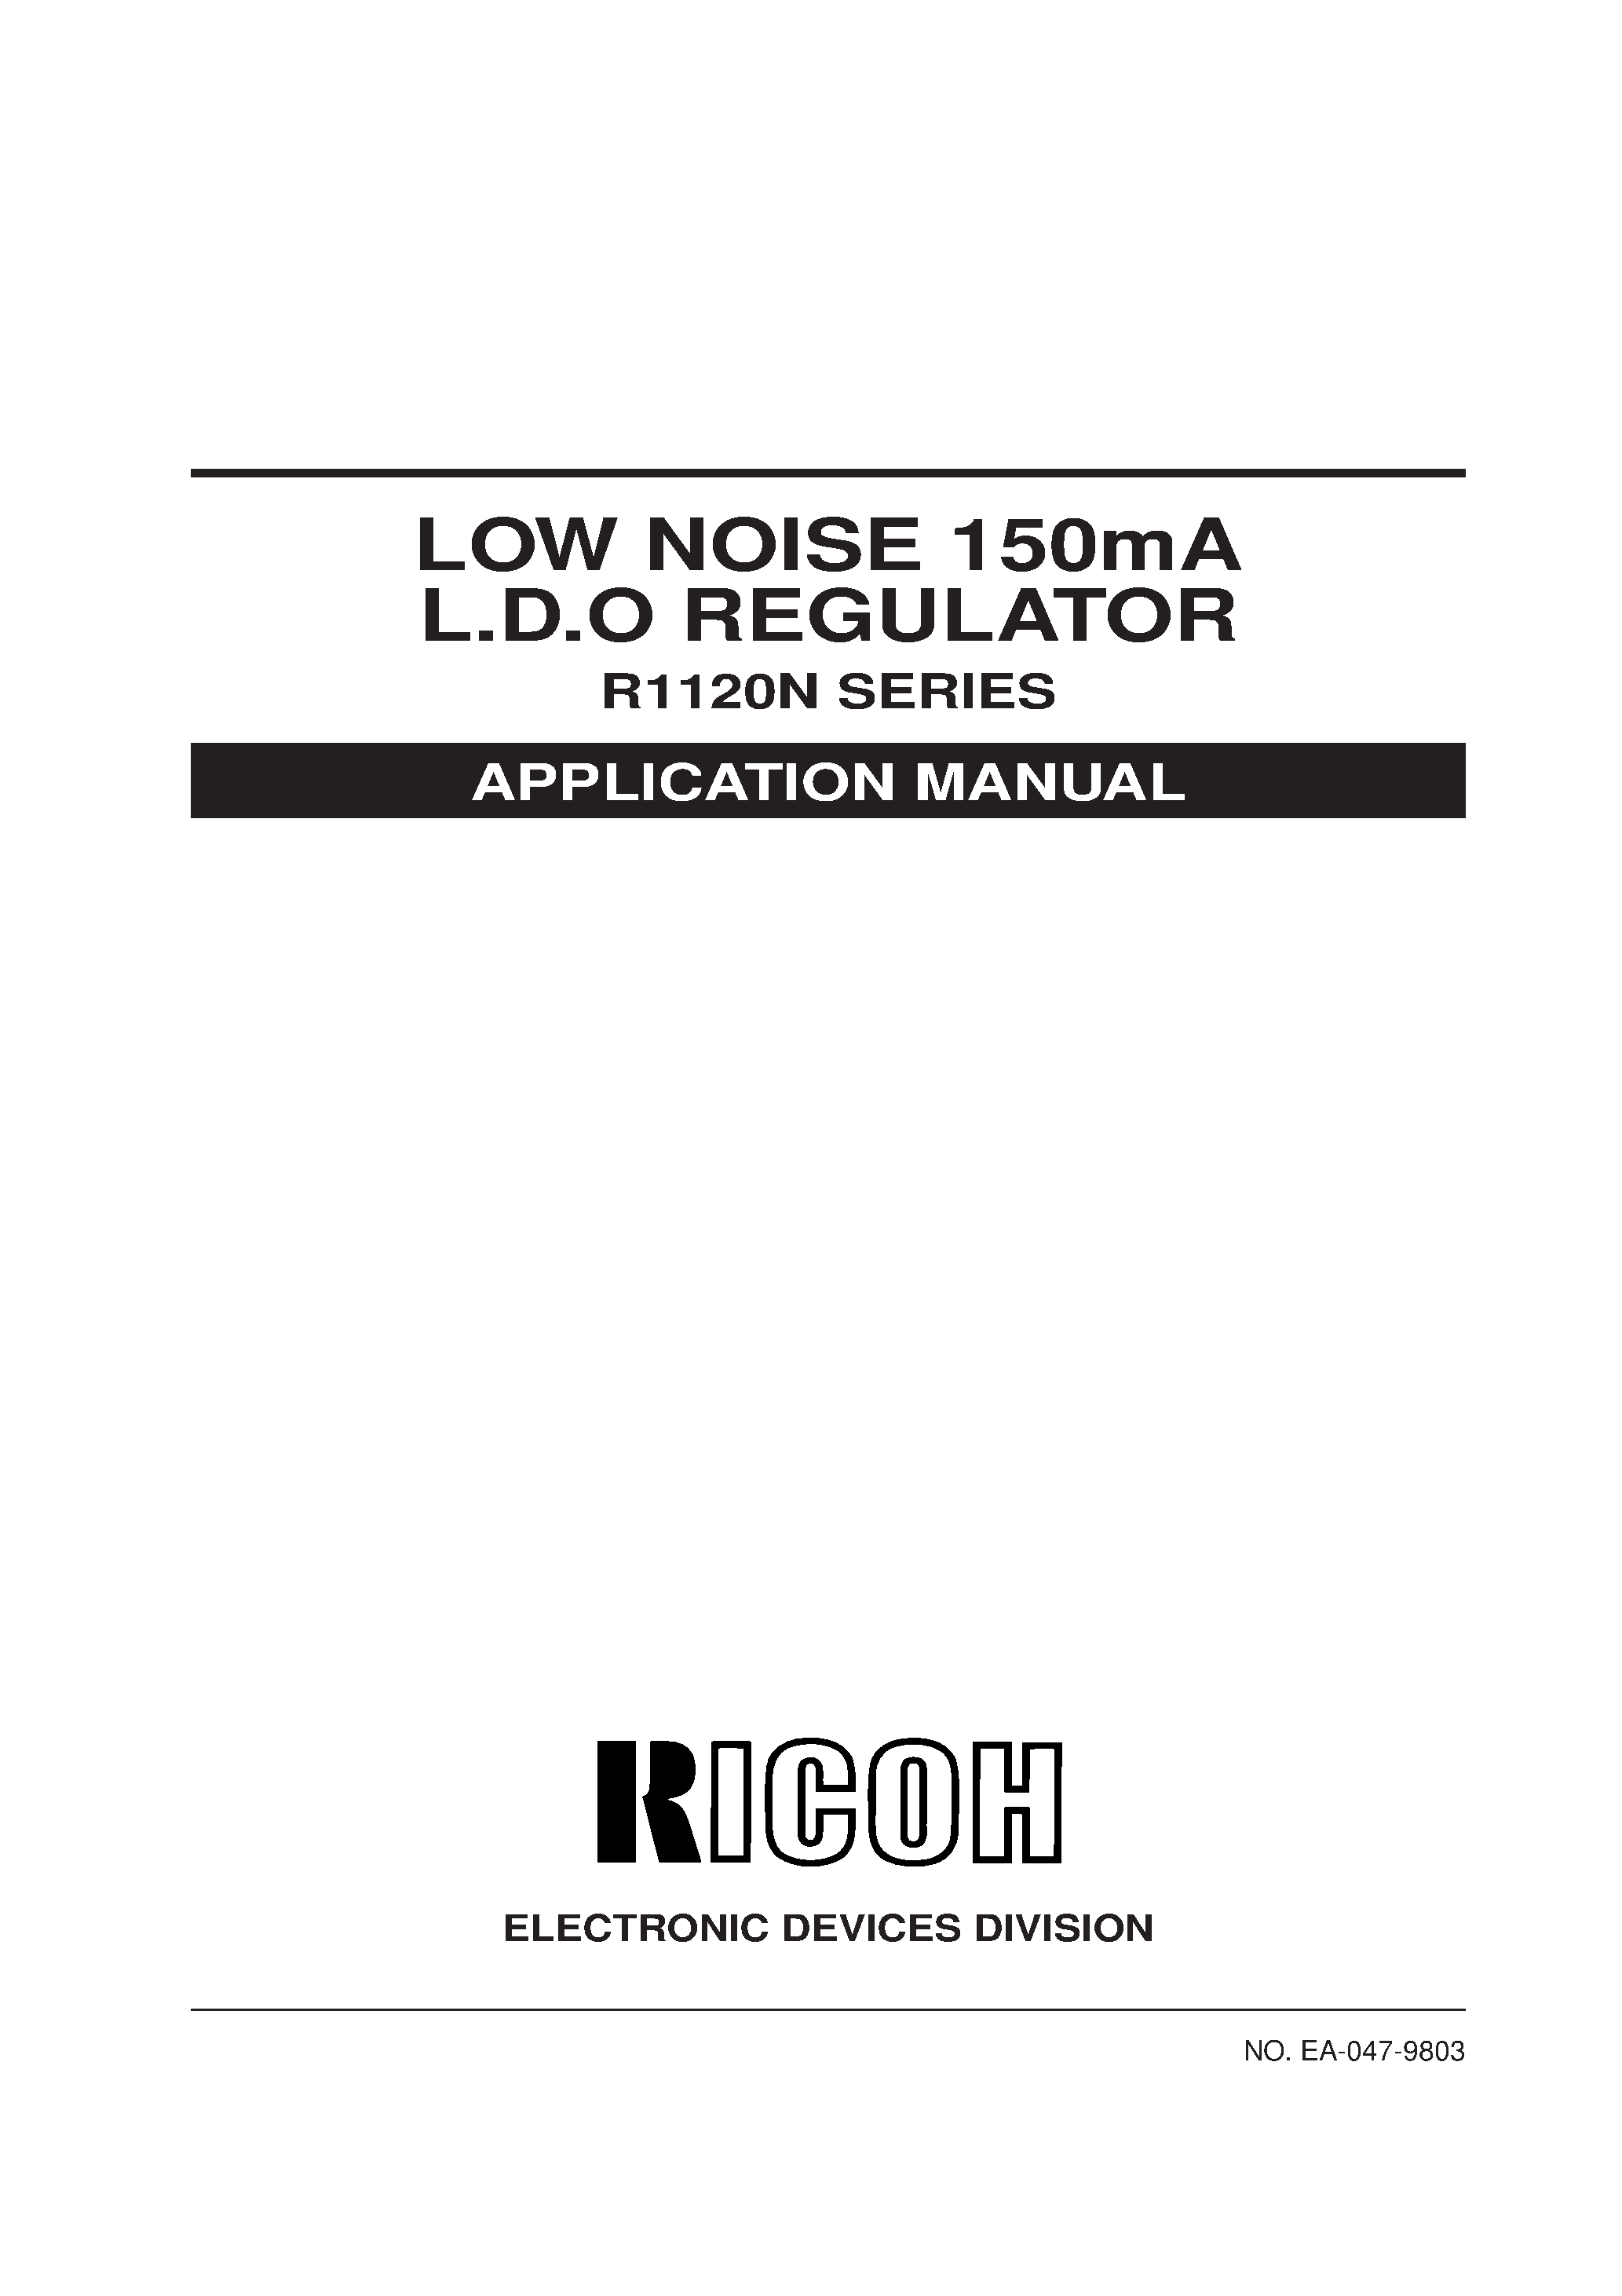 Datasheet R1120N401B-TL - LOW NOISE 150mA L.D.O REGULATOR page 1